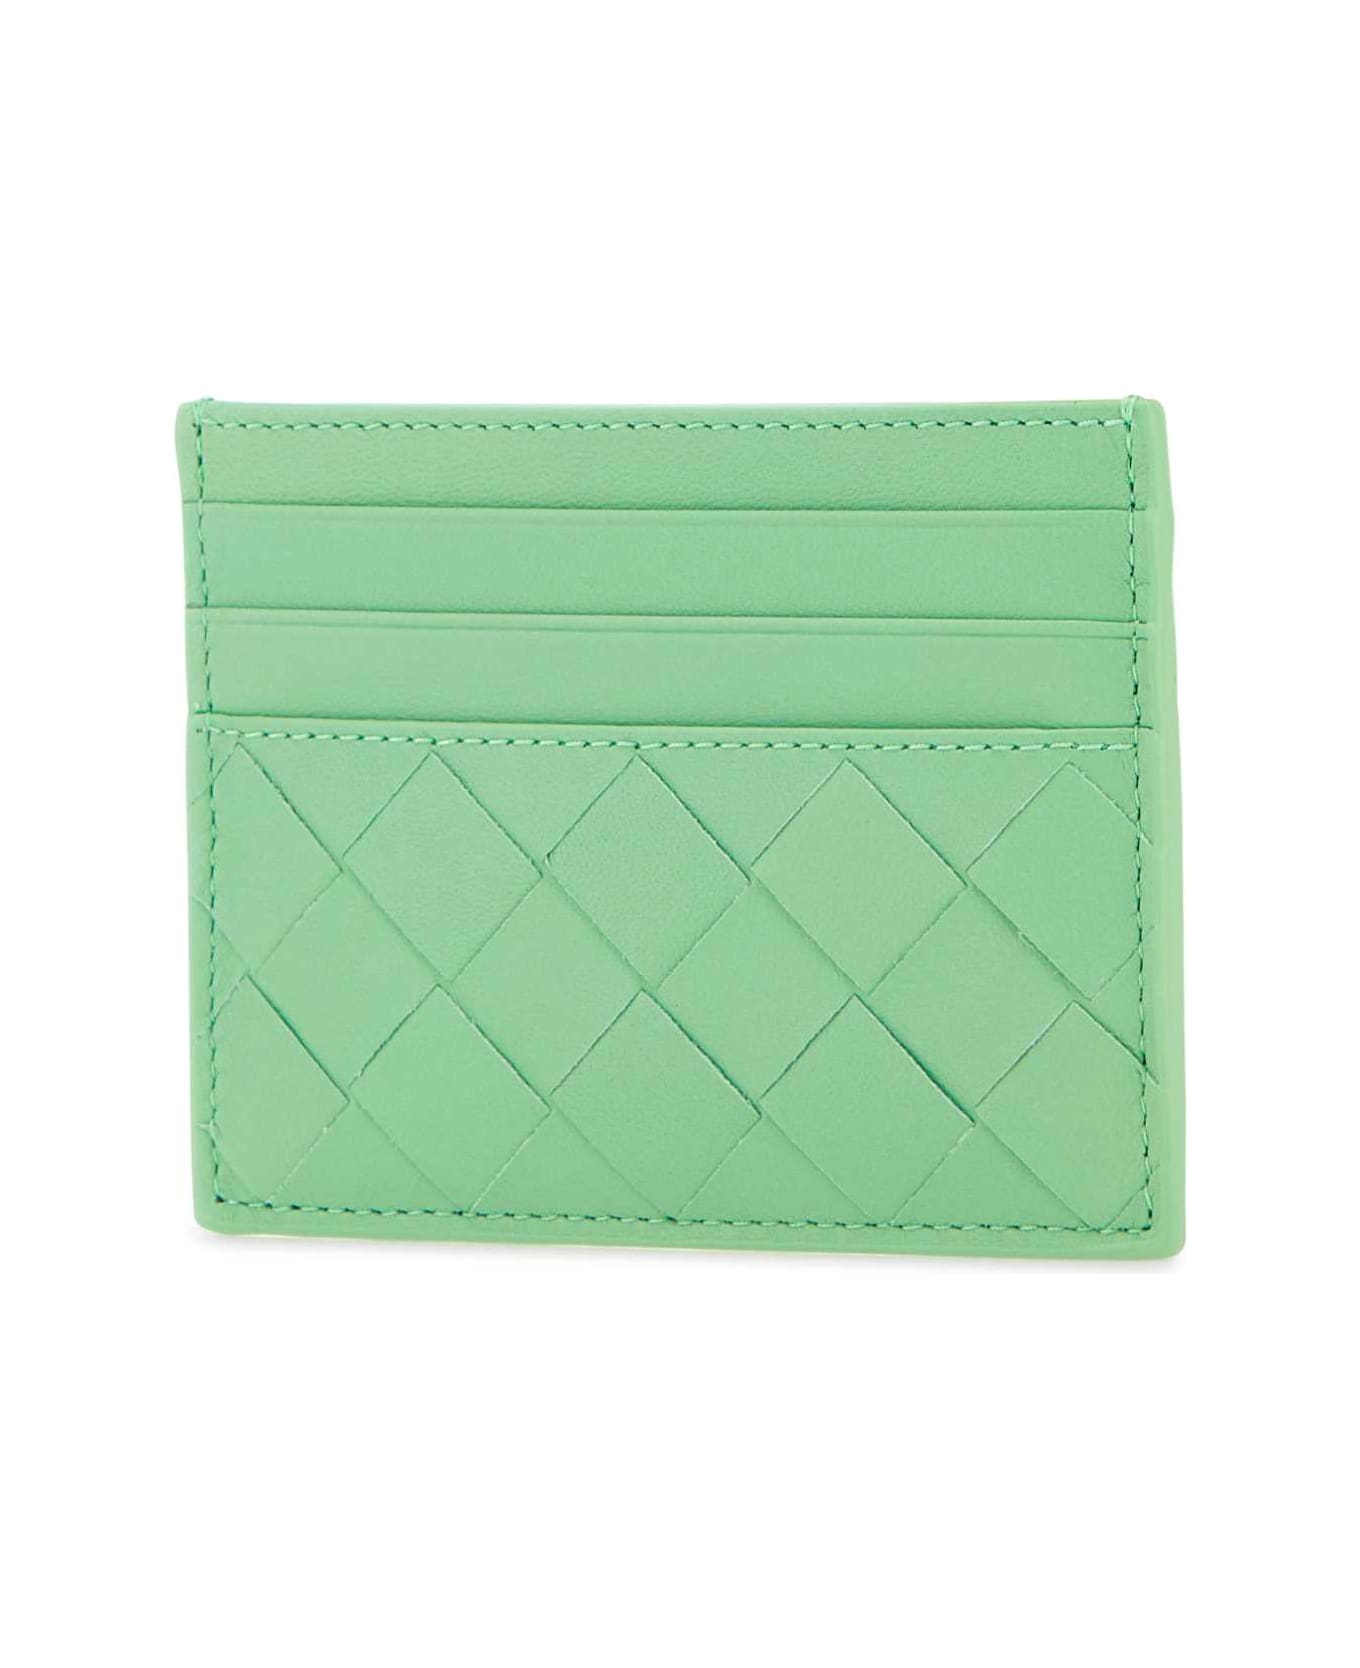 Bottega Veneta Mint Green Leather Card Holder - SIRENMINTGOLDEN 財布